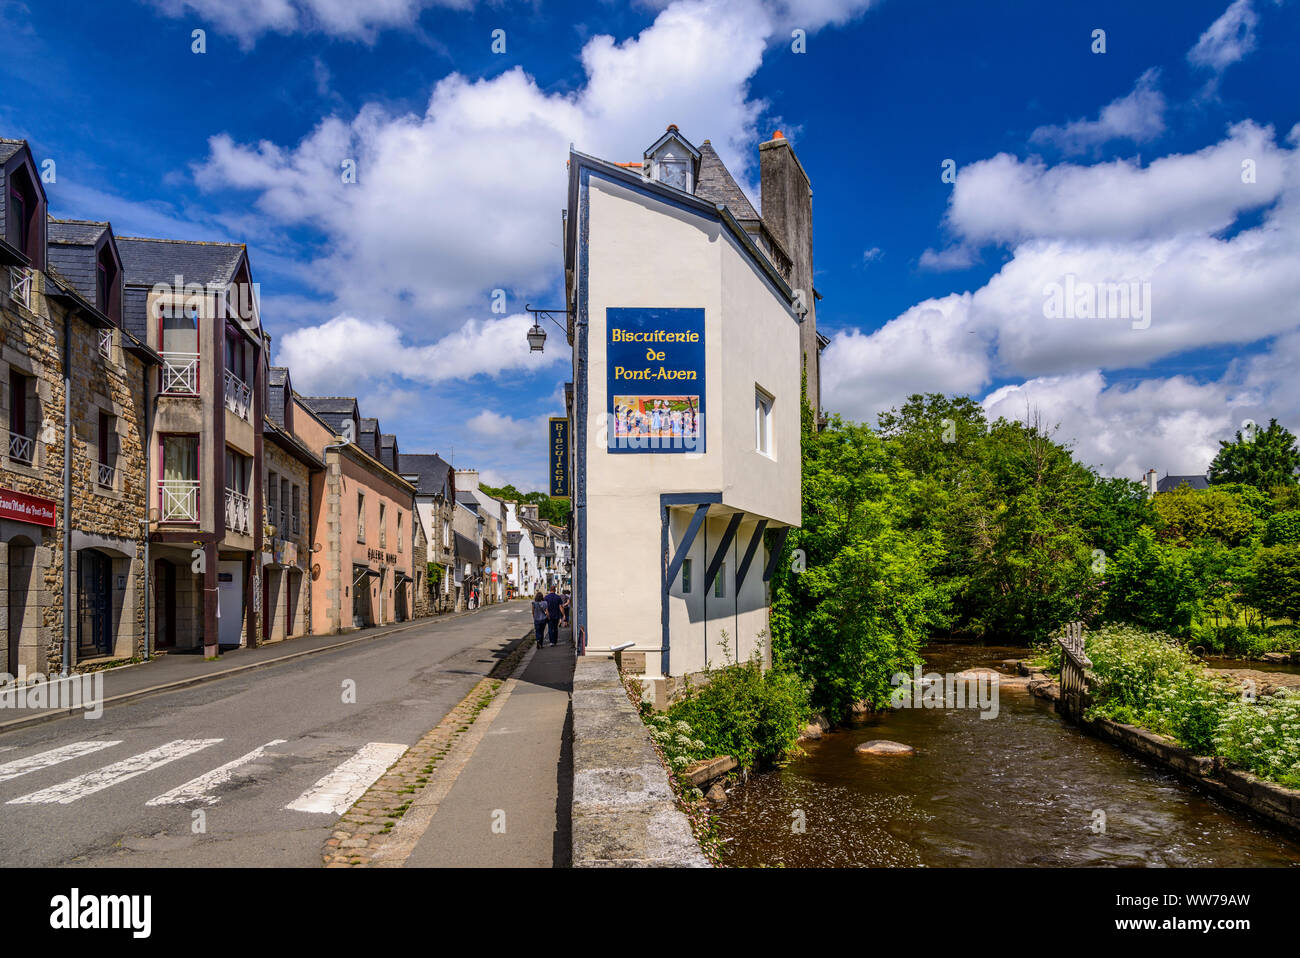 France, Brittany, FinistÃ¨re Department, Pont-Aven, Rue du Port, Biscuiterie de Pont-Aven Stock Photo